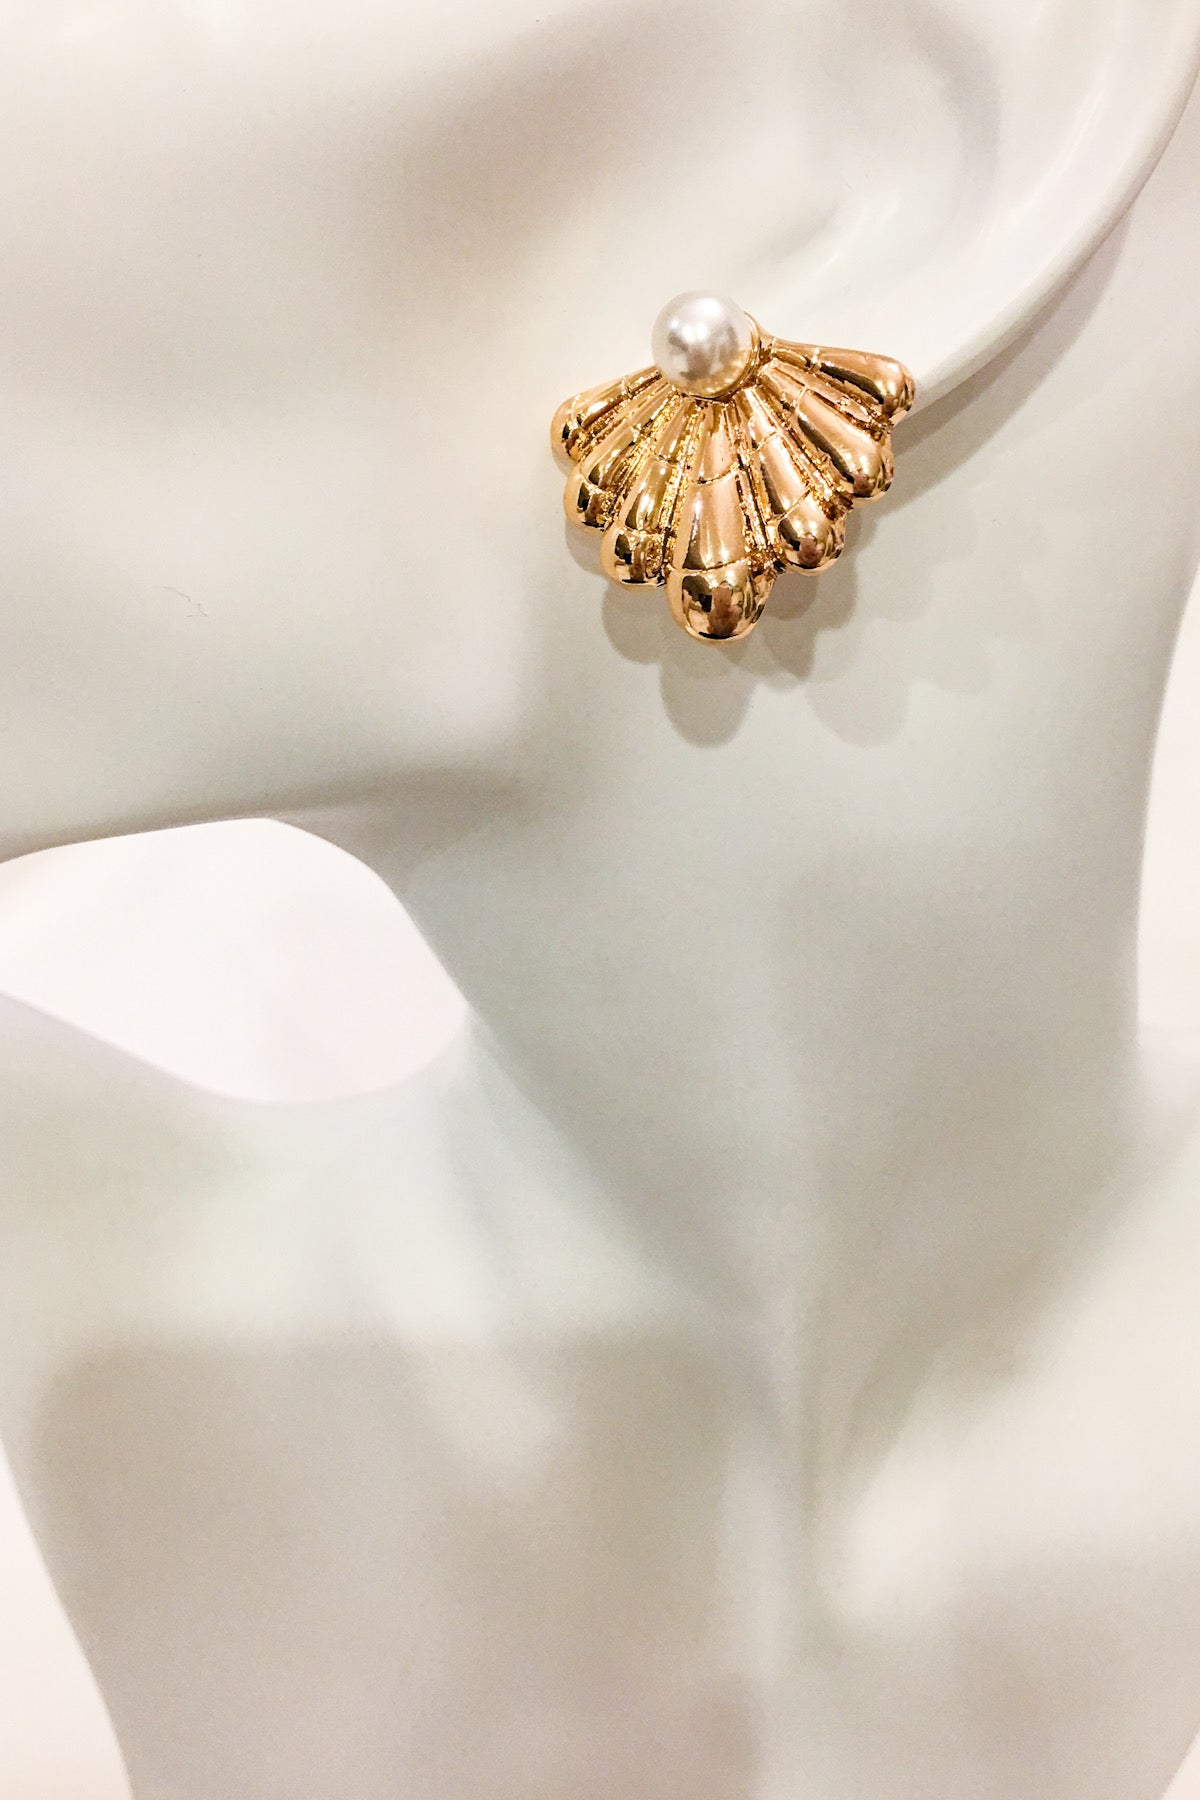 SKYE San Francisco Shop SF Chic Modern Elegant Classy Women Jewelry French Parisian Minimalist Dion 18K Gold Freshwater Pearl Earrings 6